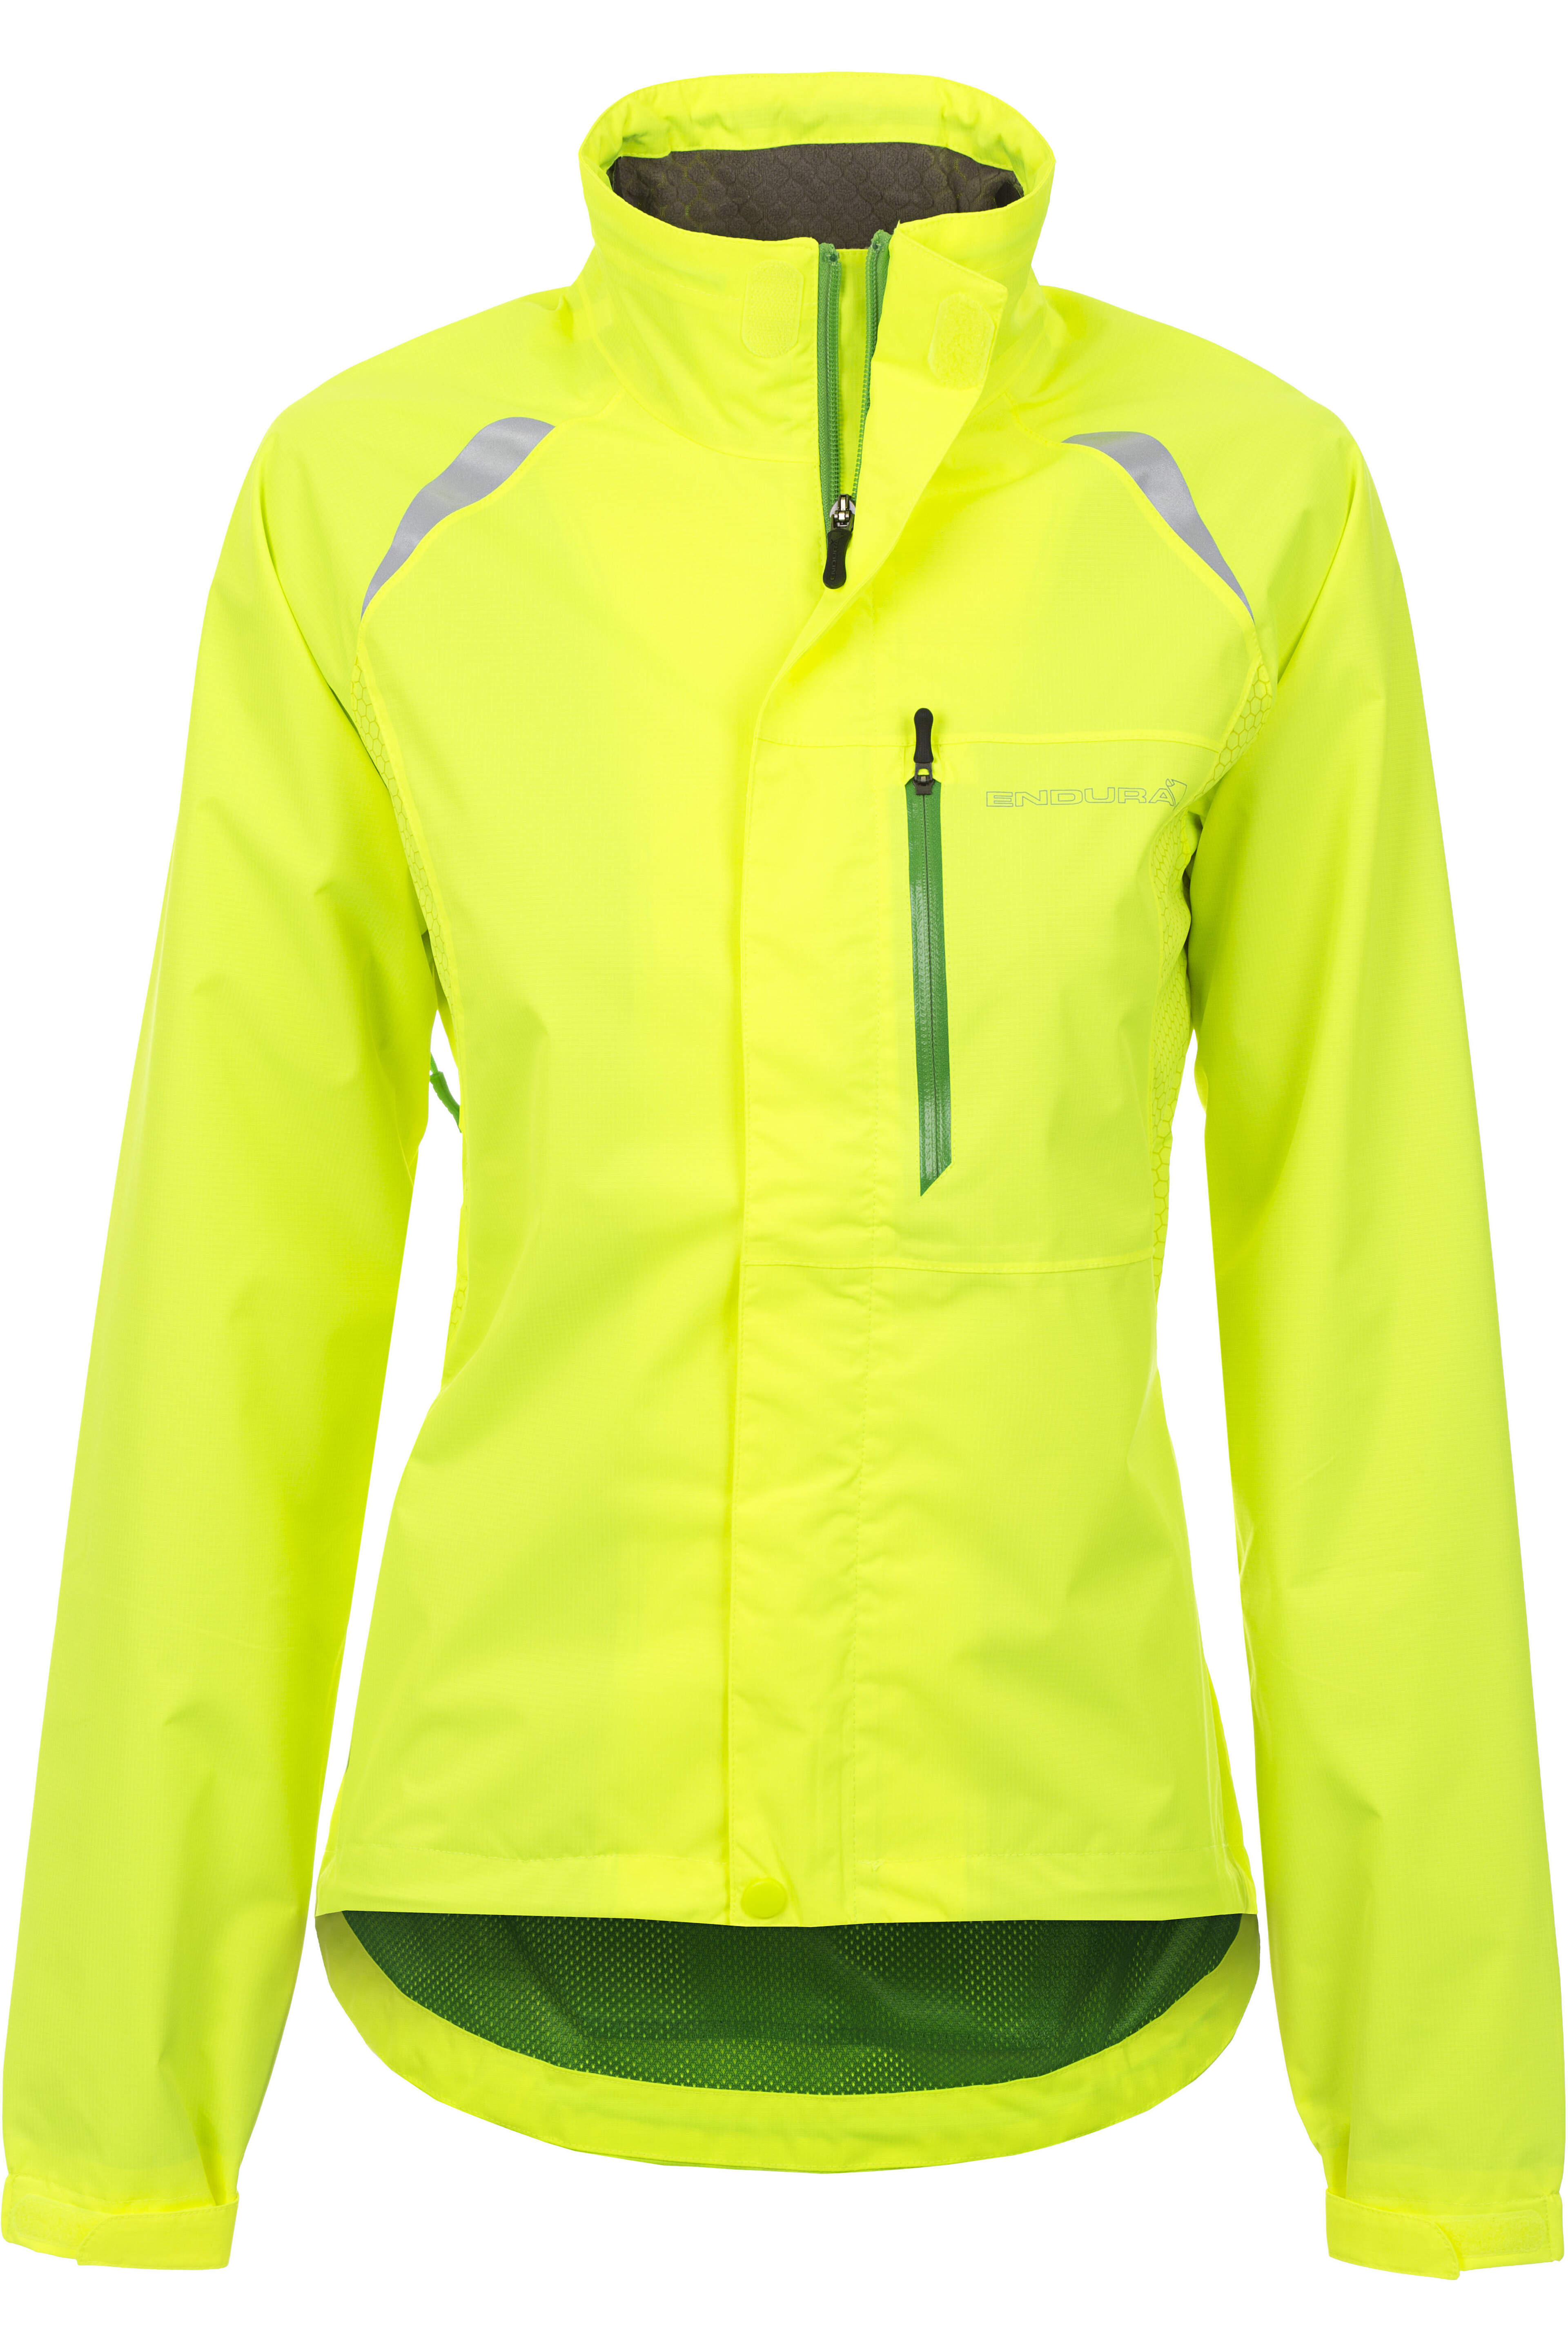 Endura Gridlock II Jacke Damen Neon Gelb online kaufen